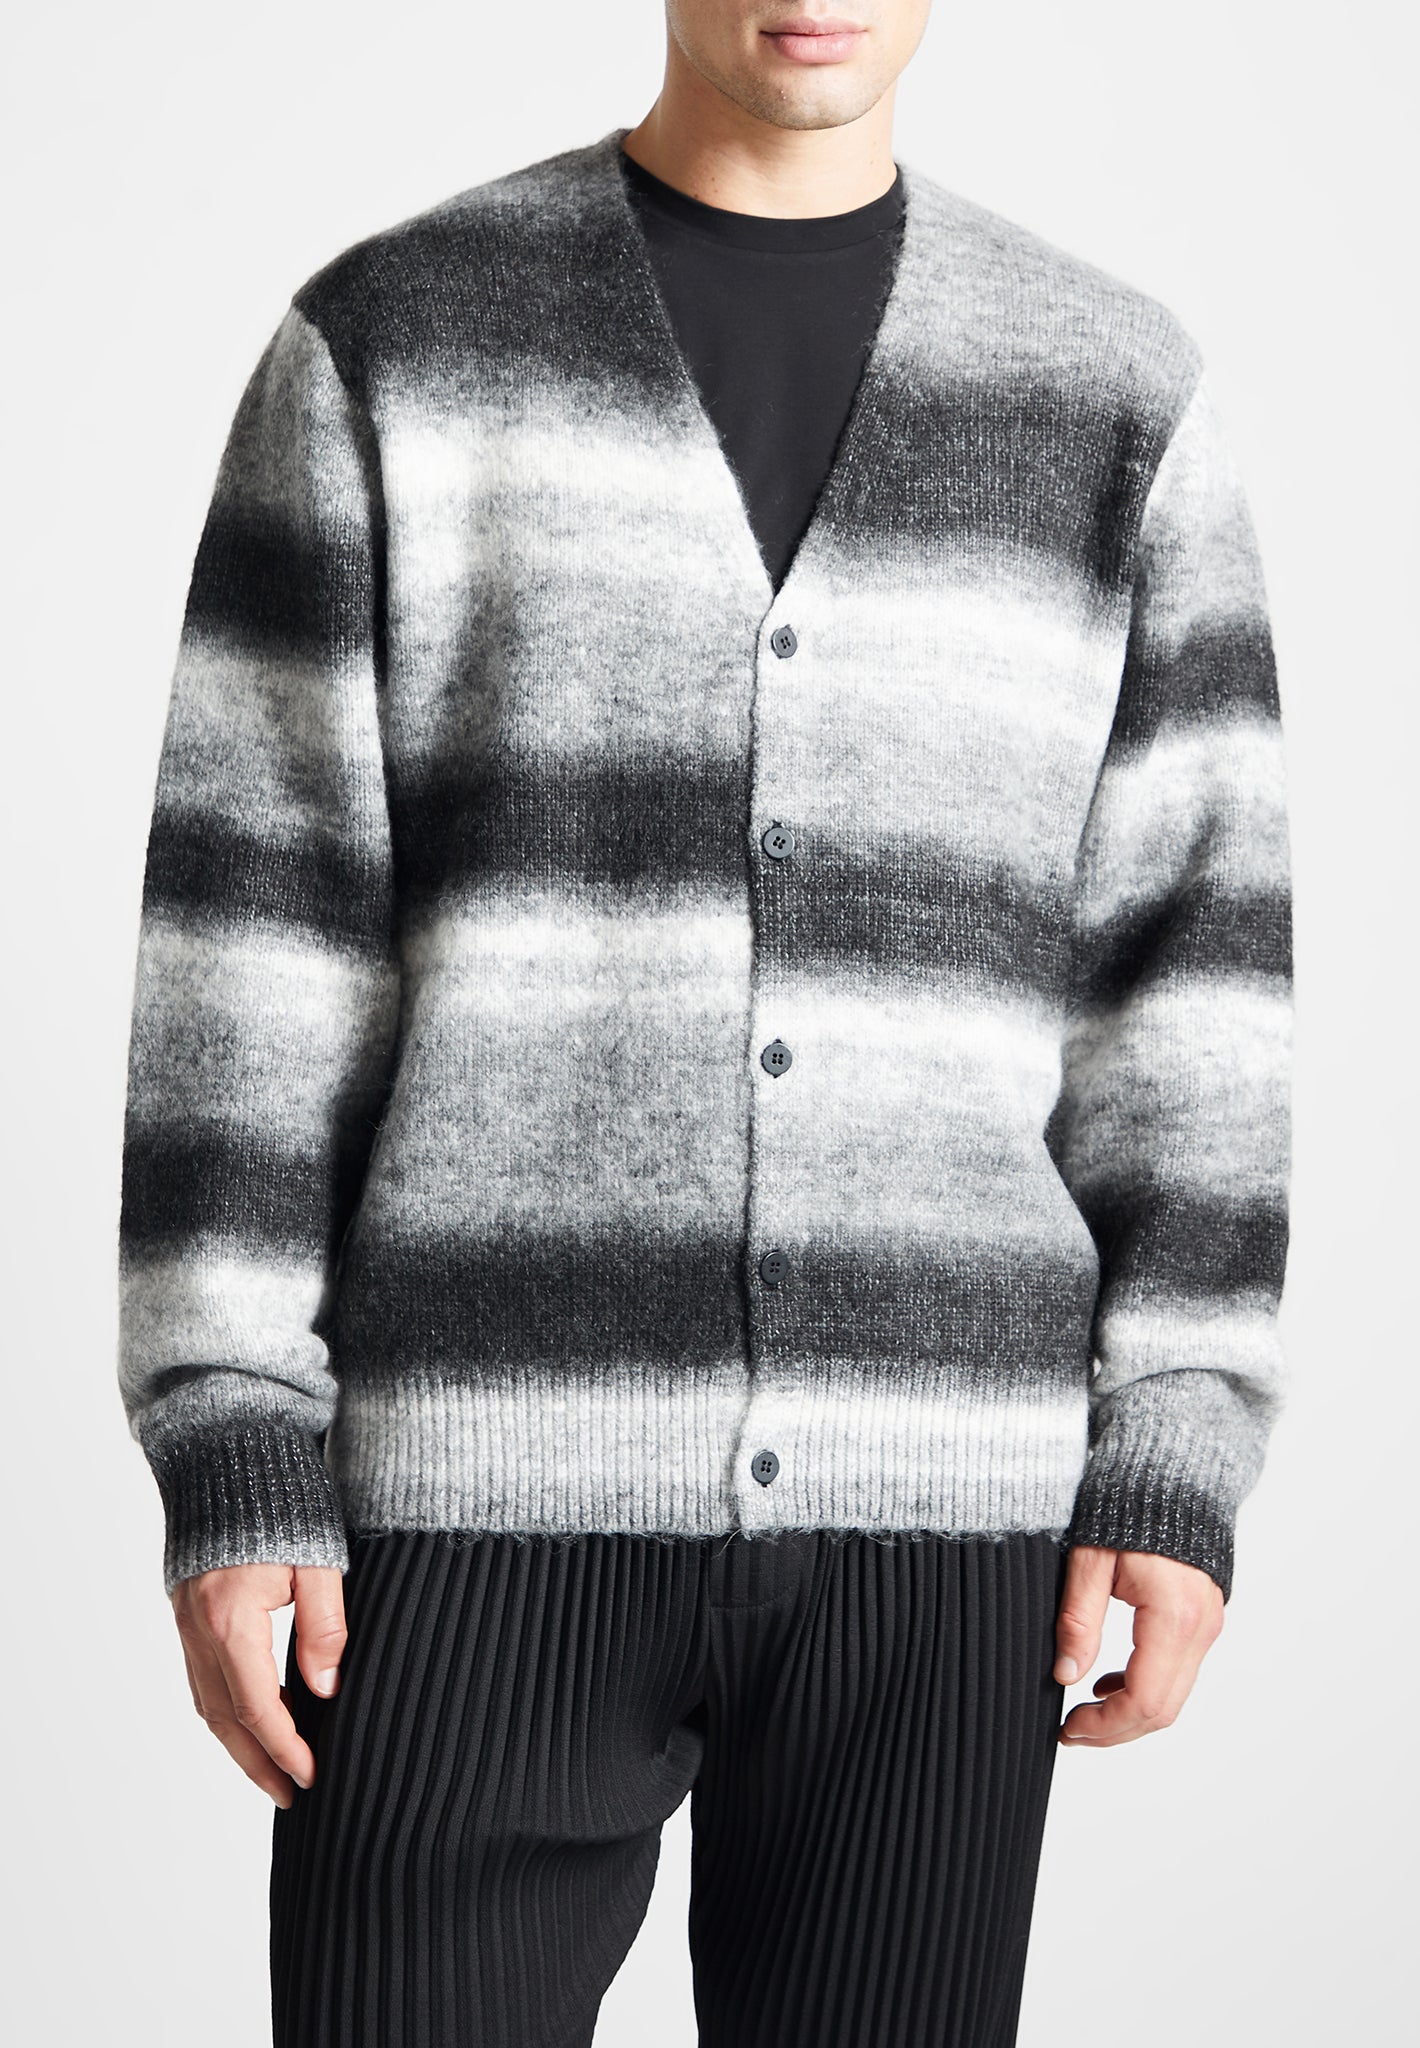 Brushed Knit Ombre Cardigan - Black/Grey